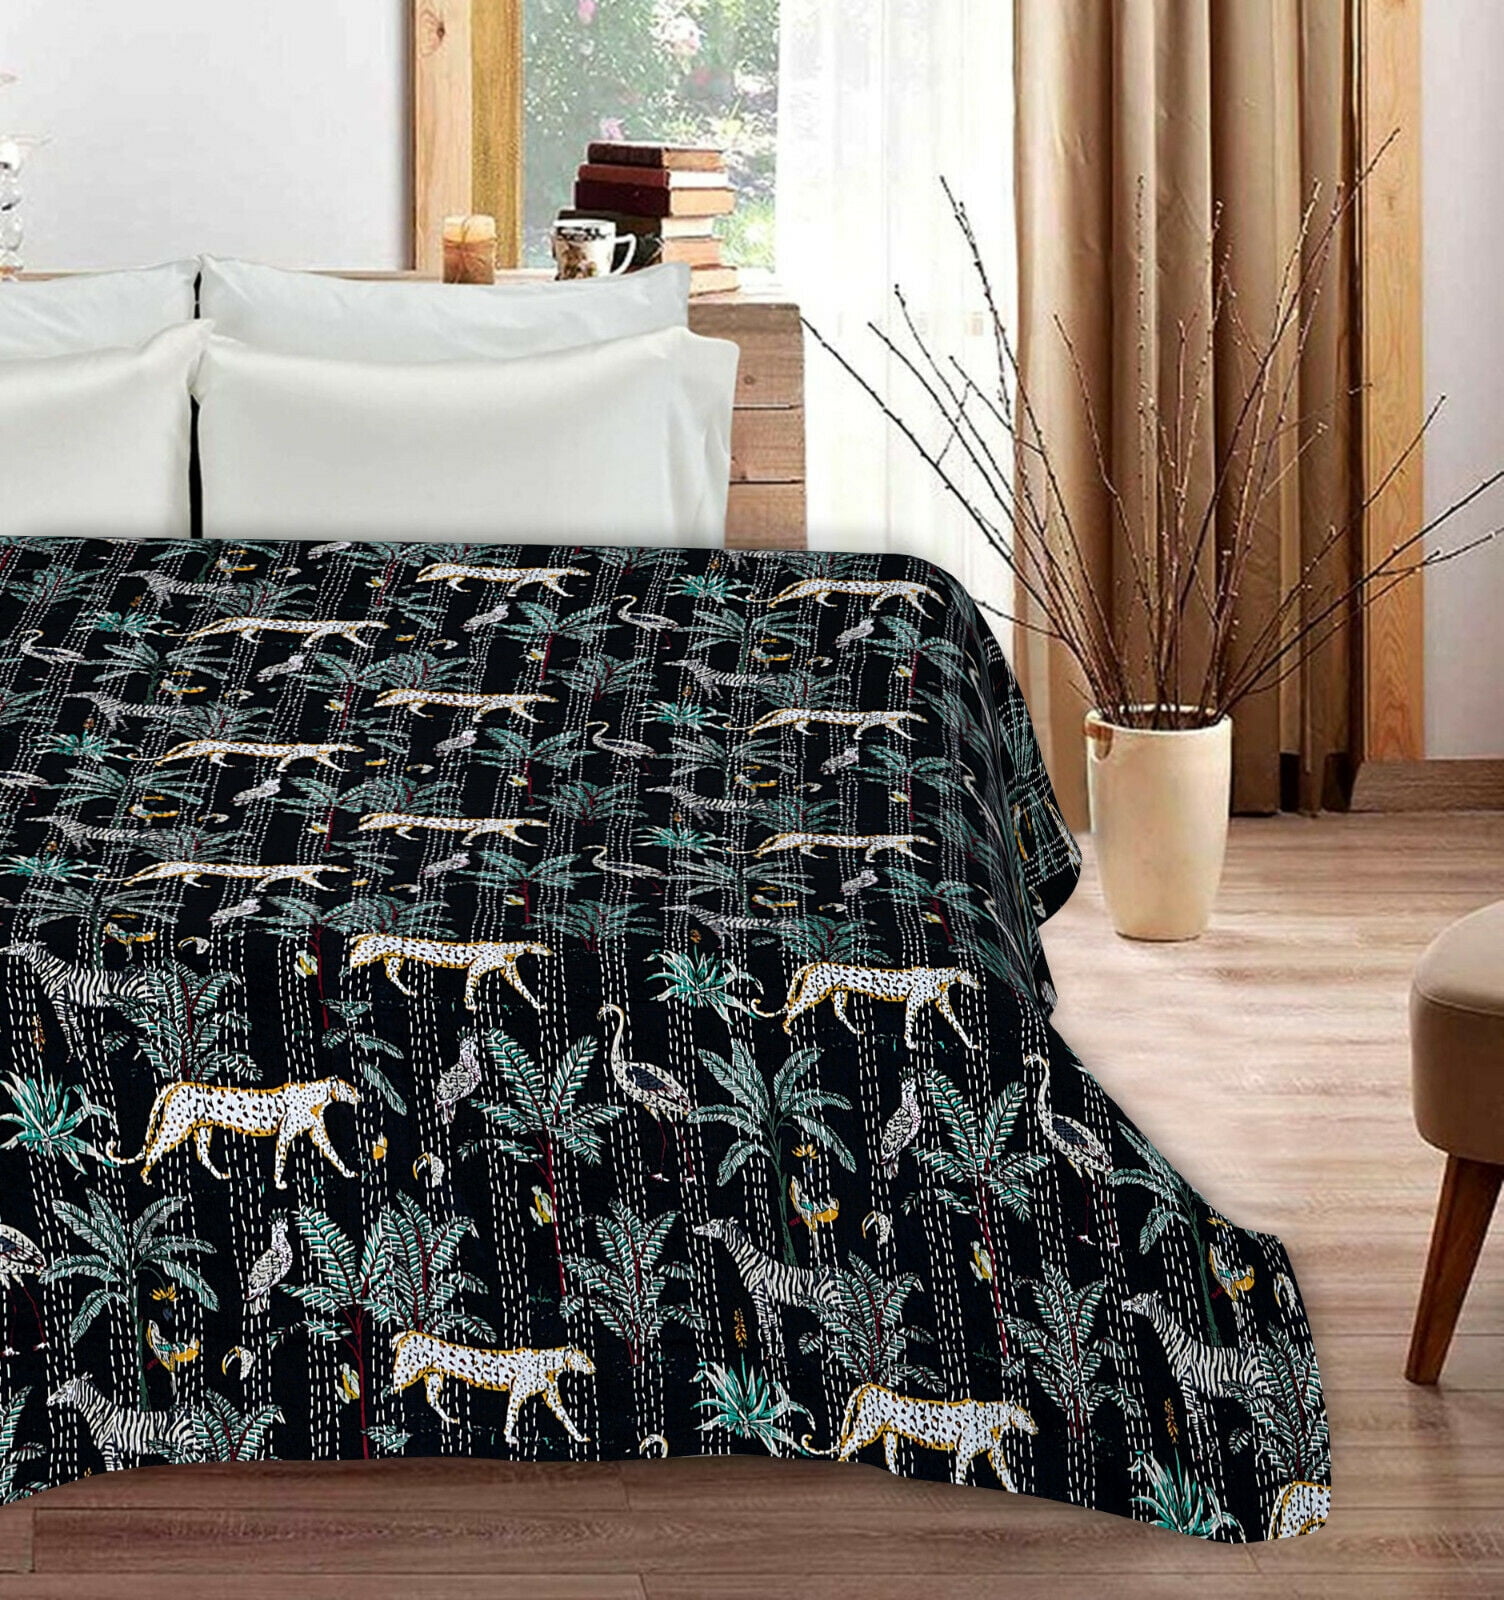 Indian Kantha Quilt Handmade Cotton Bedspread Comforter Blanket Bedding Throw 